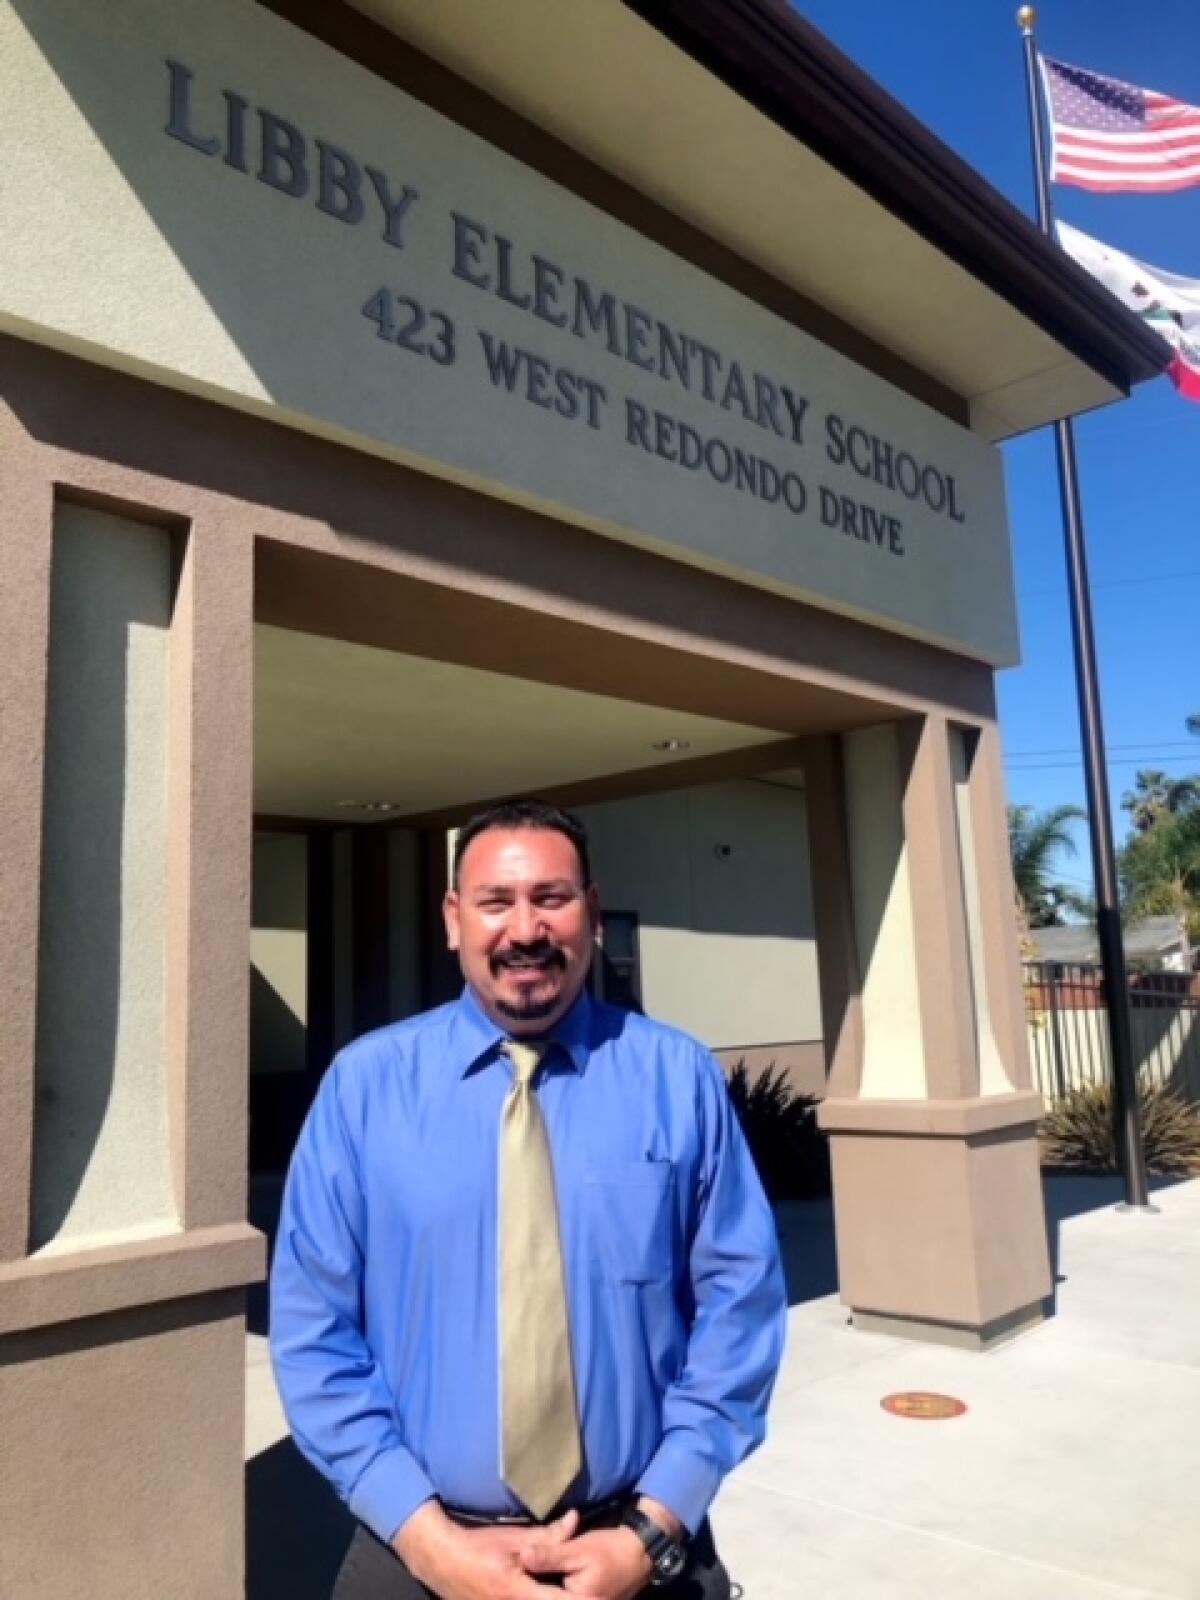 Libby Elementary Principal Cesar Mora was named Elementary Principal of the Year by the ACSA.